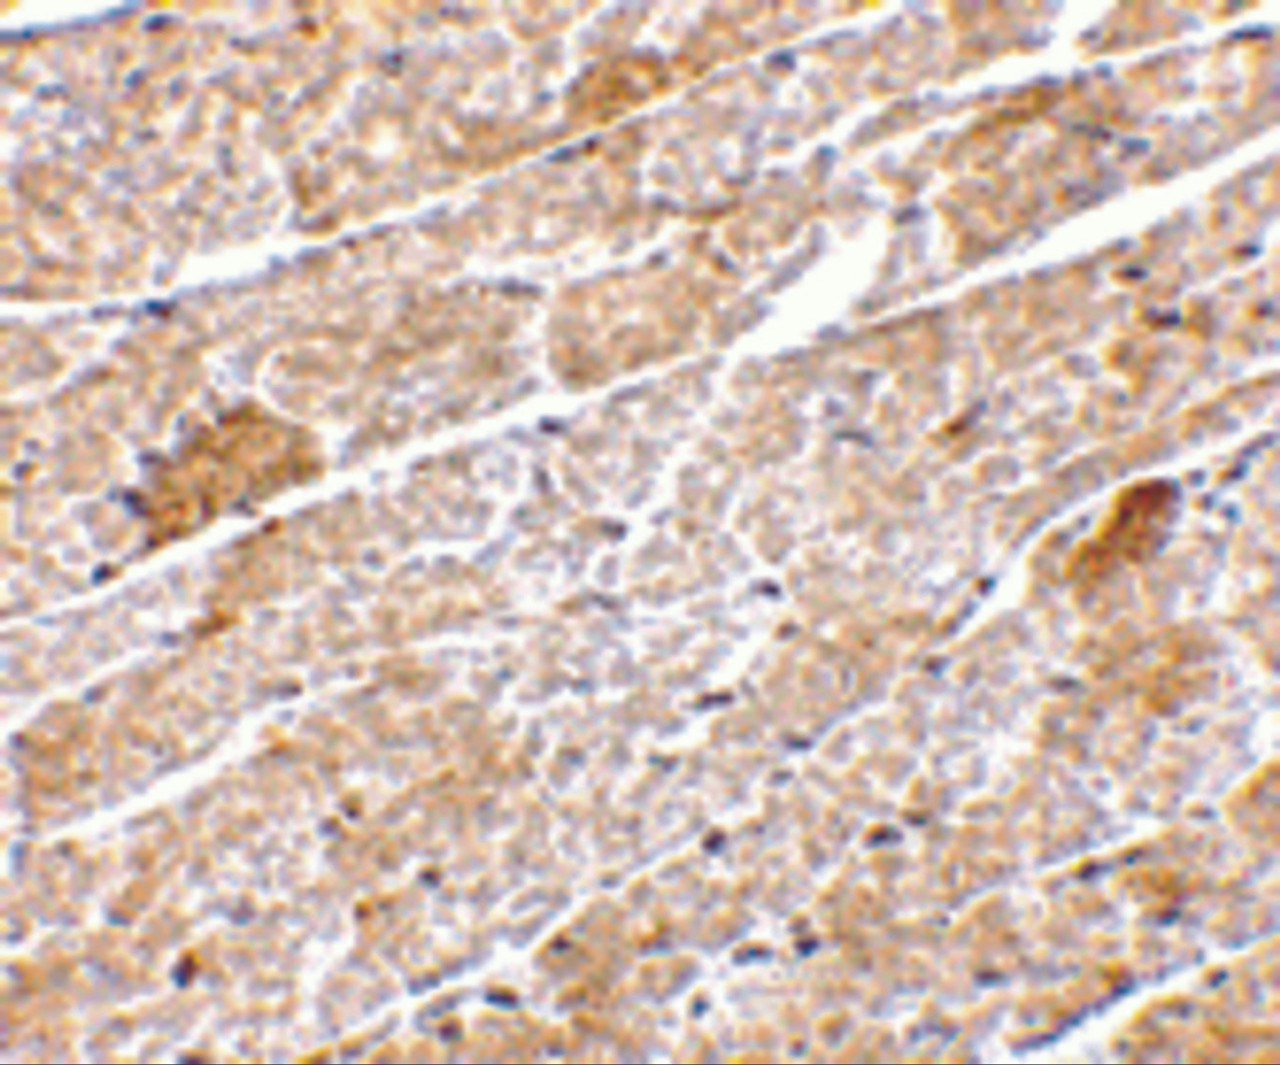 Immunohistochemistry of Neuritin in mouse heart tissue with Neuritin antibody at 5 ug/mL.